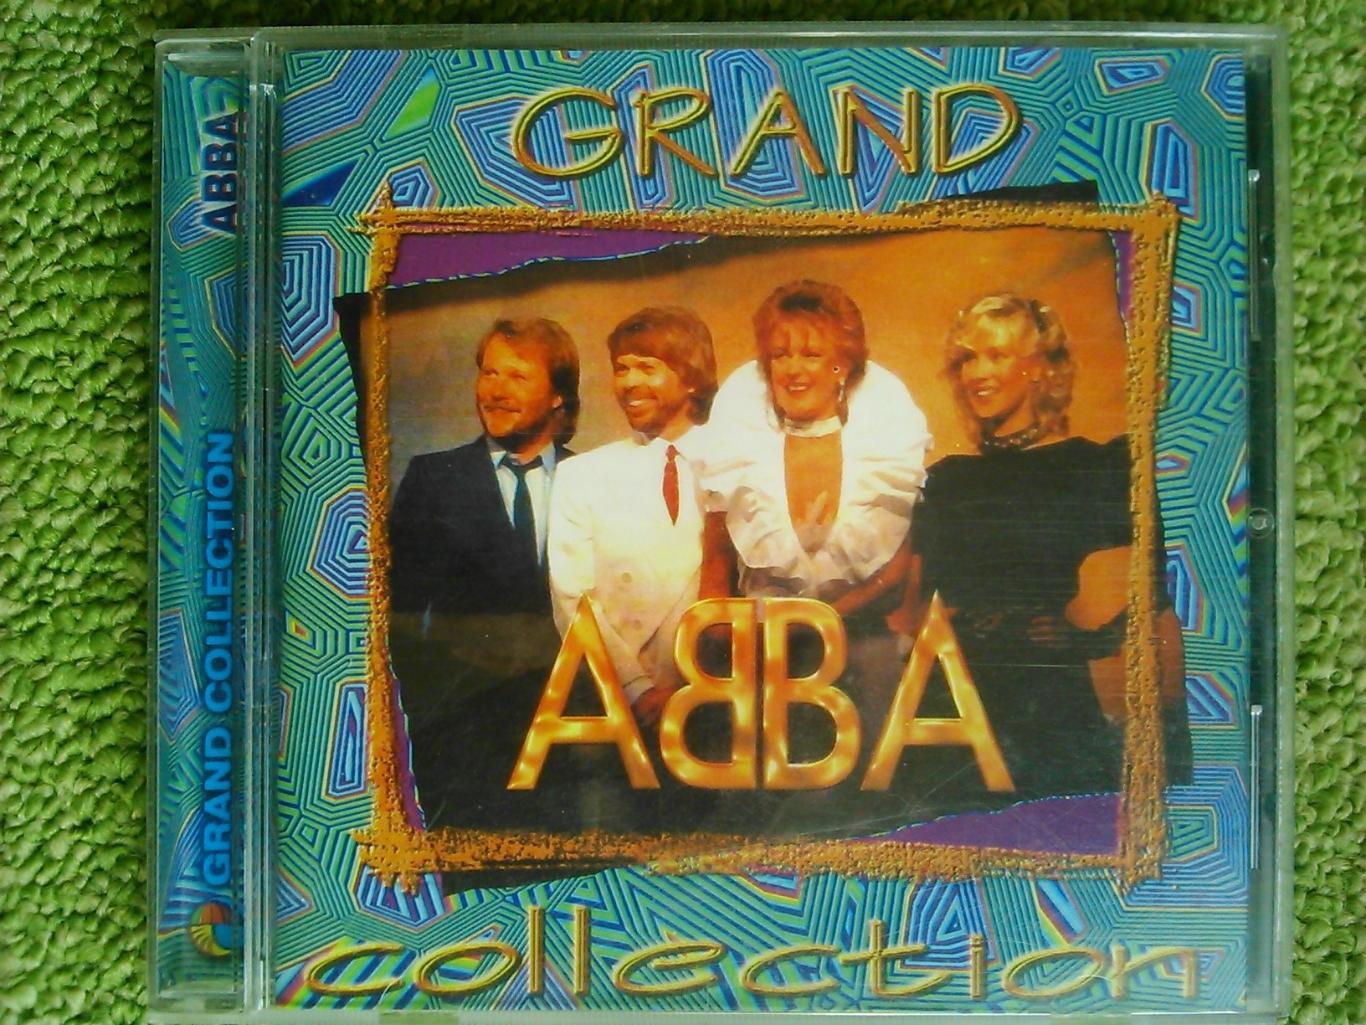 Audio CD ABBA (АББА) Grand Collection. Оптом скидки до 50%